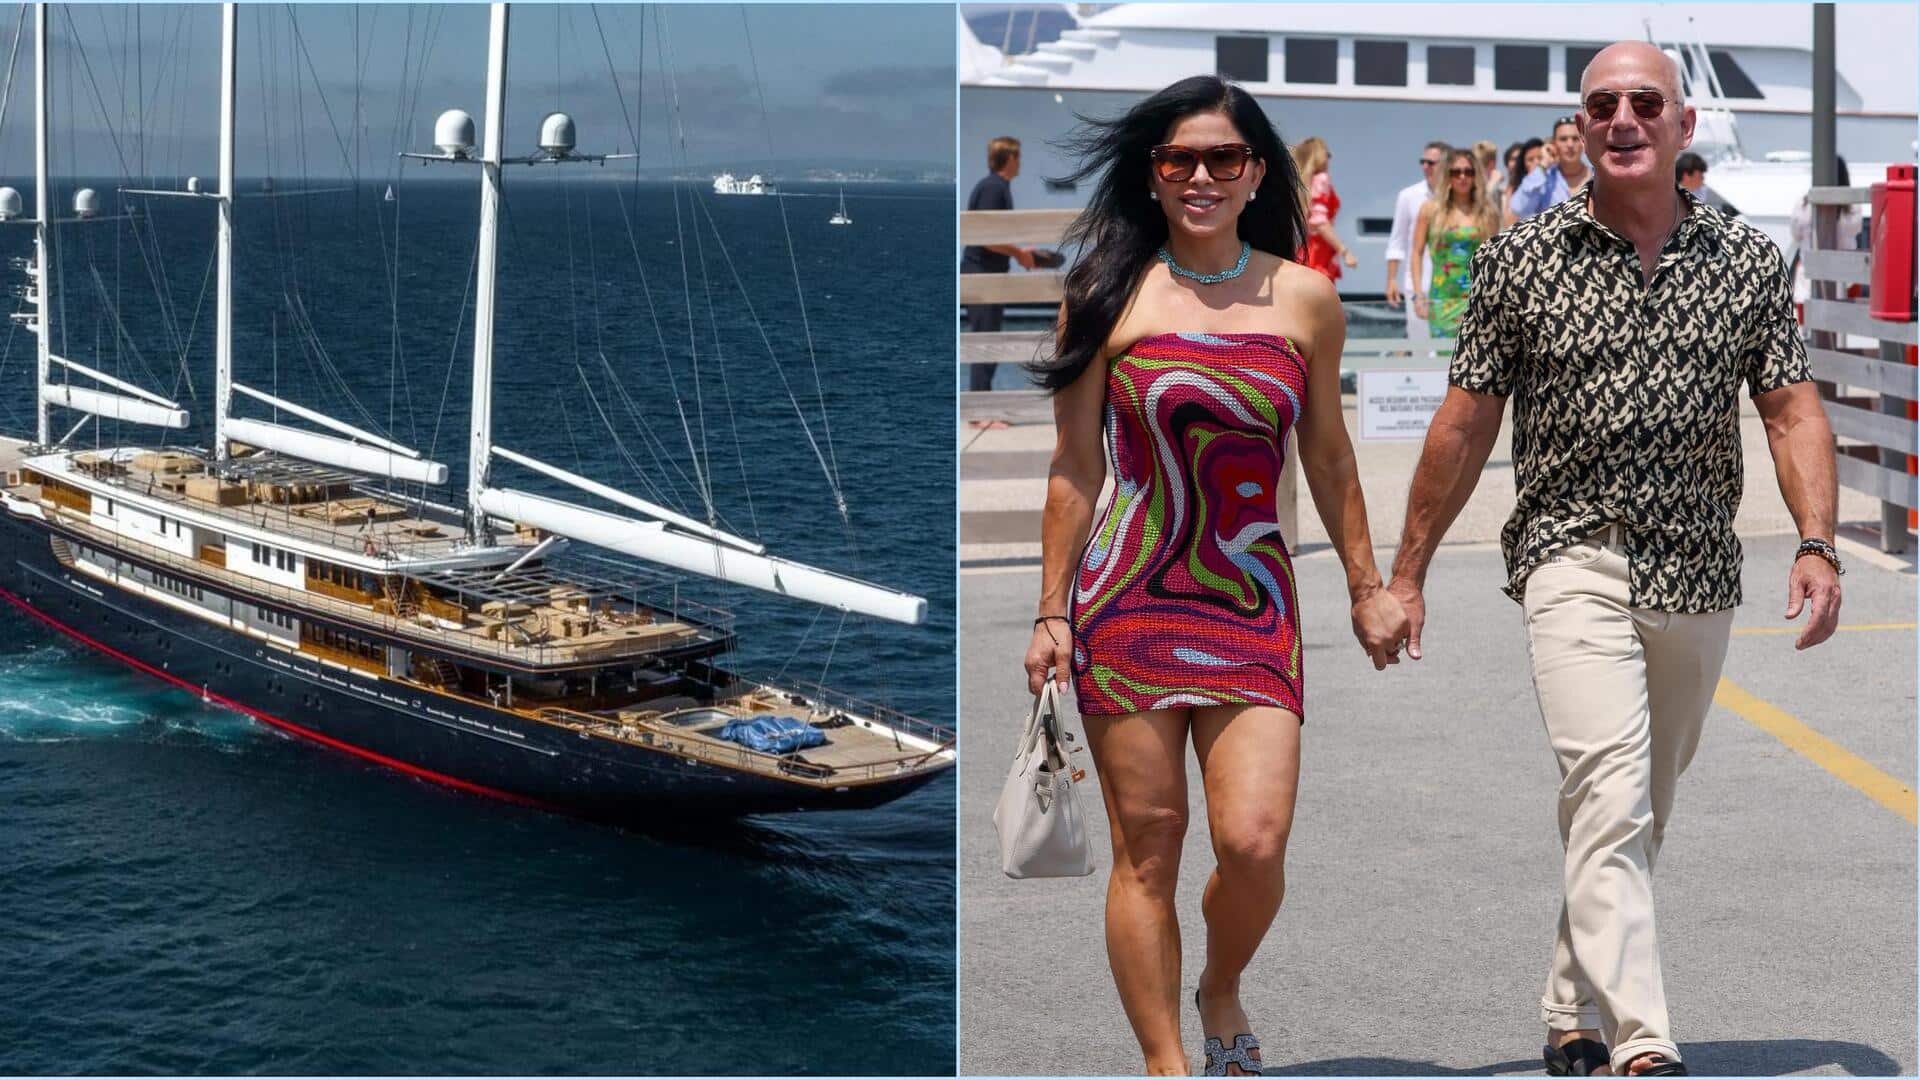 Jeff Bezos's $500M yacht: World's largest, has Bezos's girlfriend's sculpture!